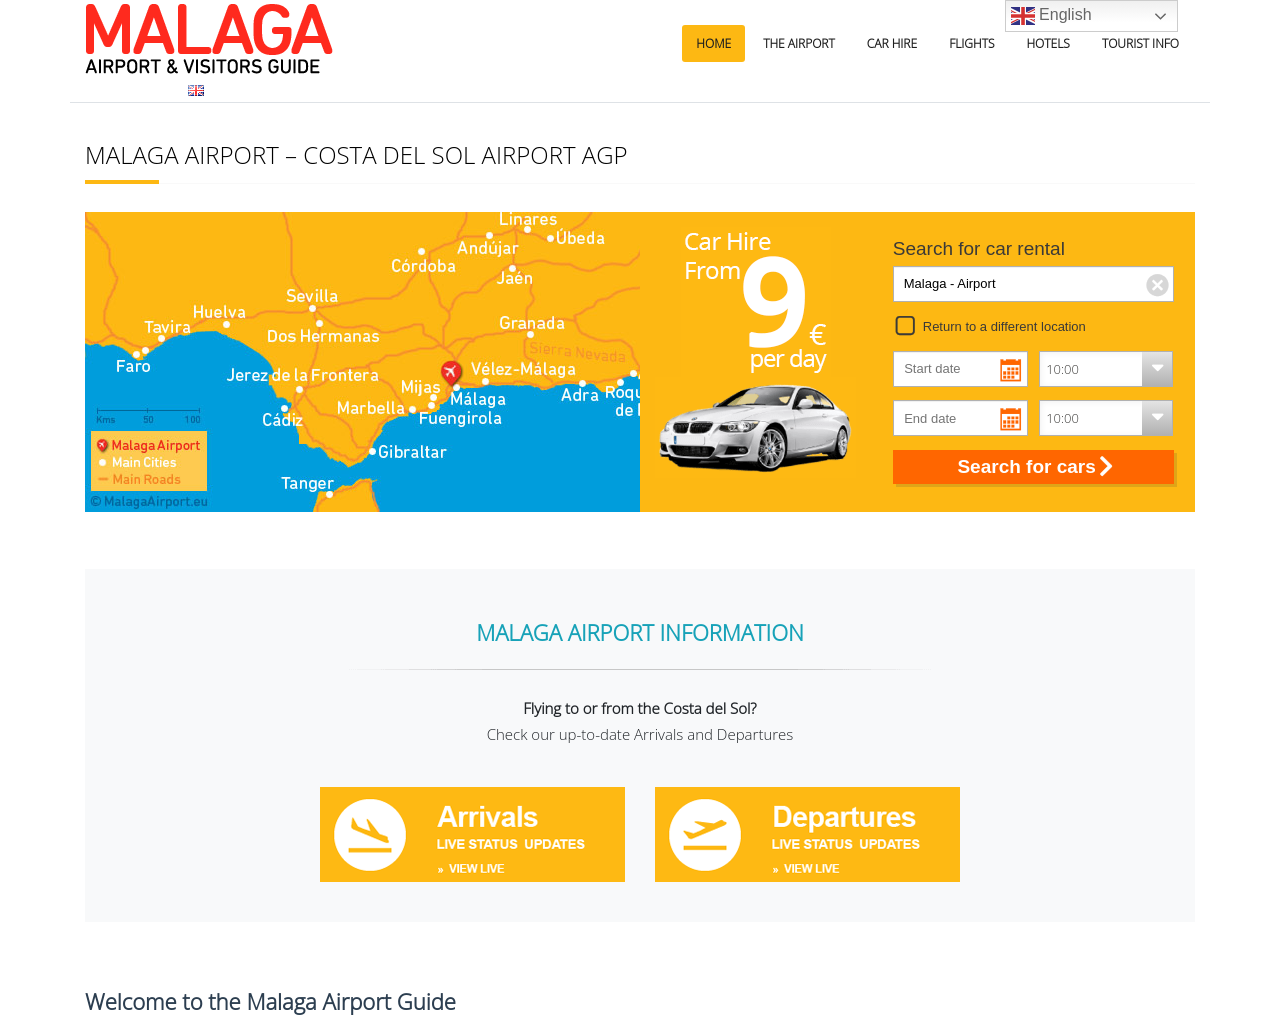 malagaairport.eu